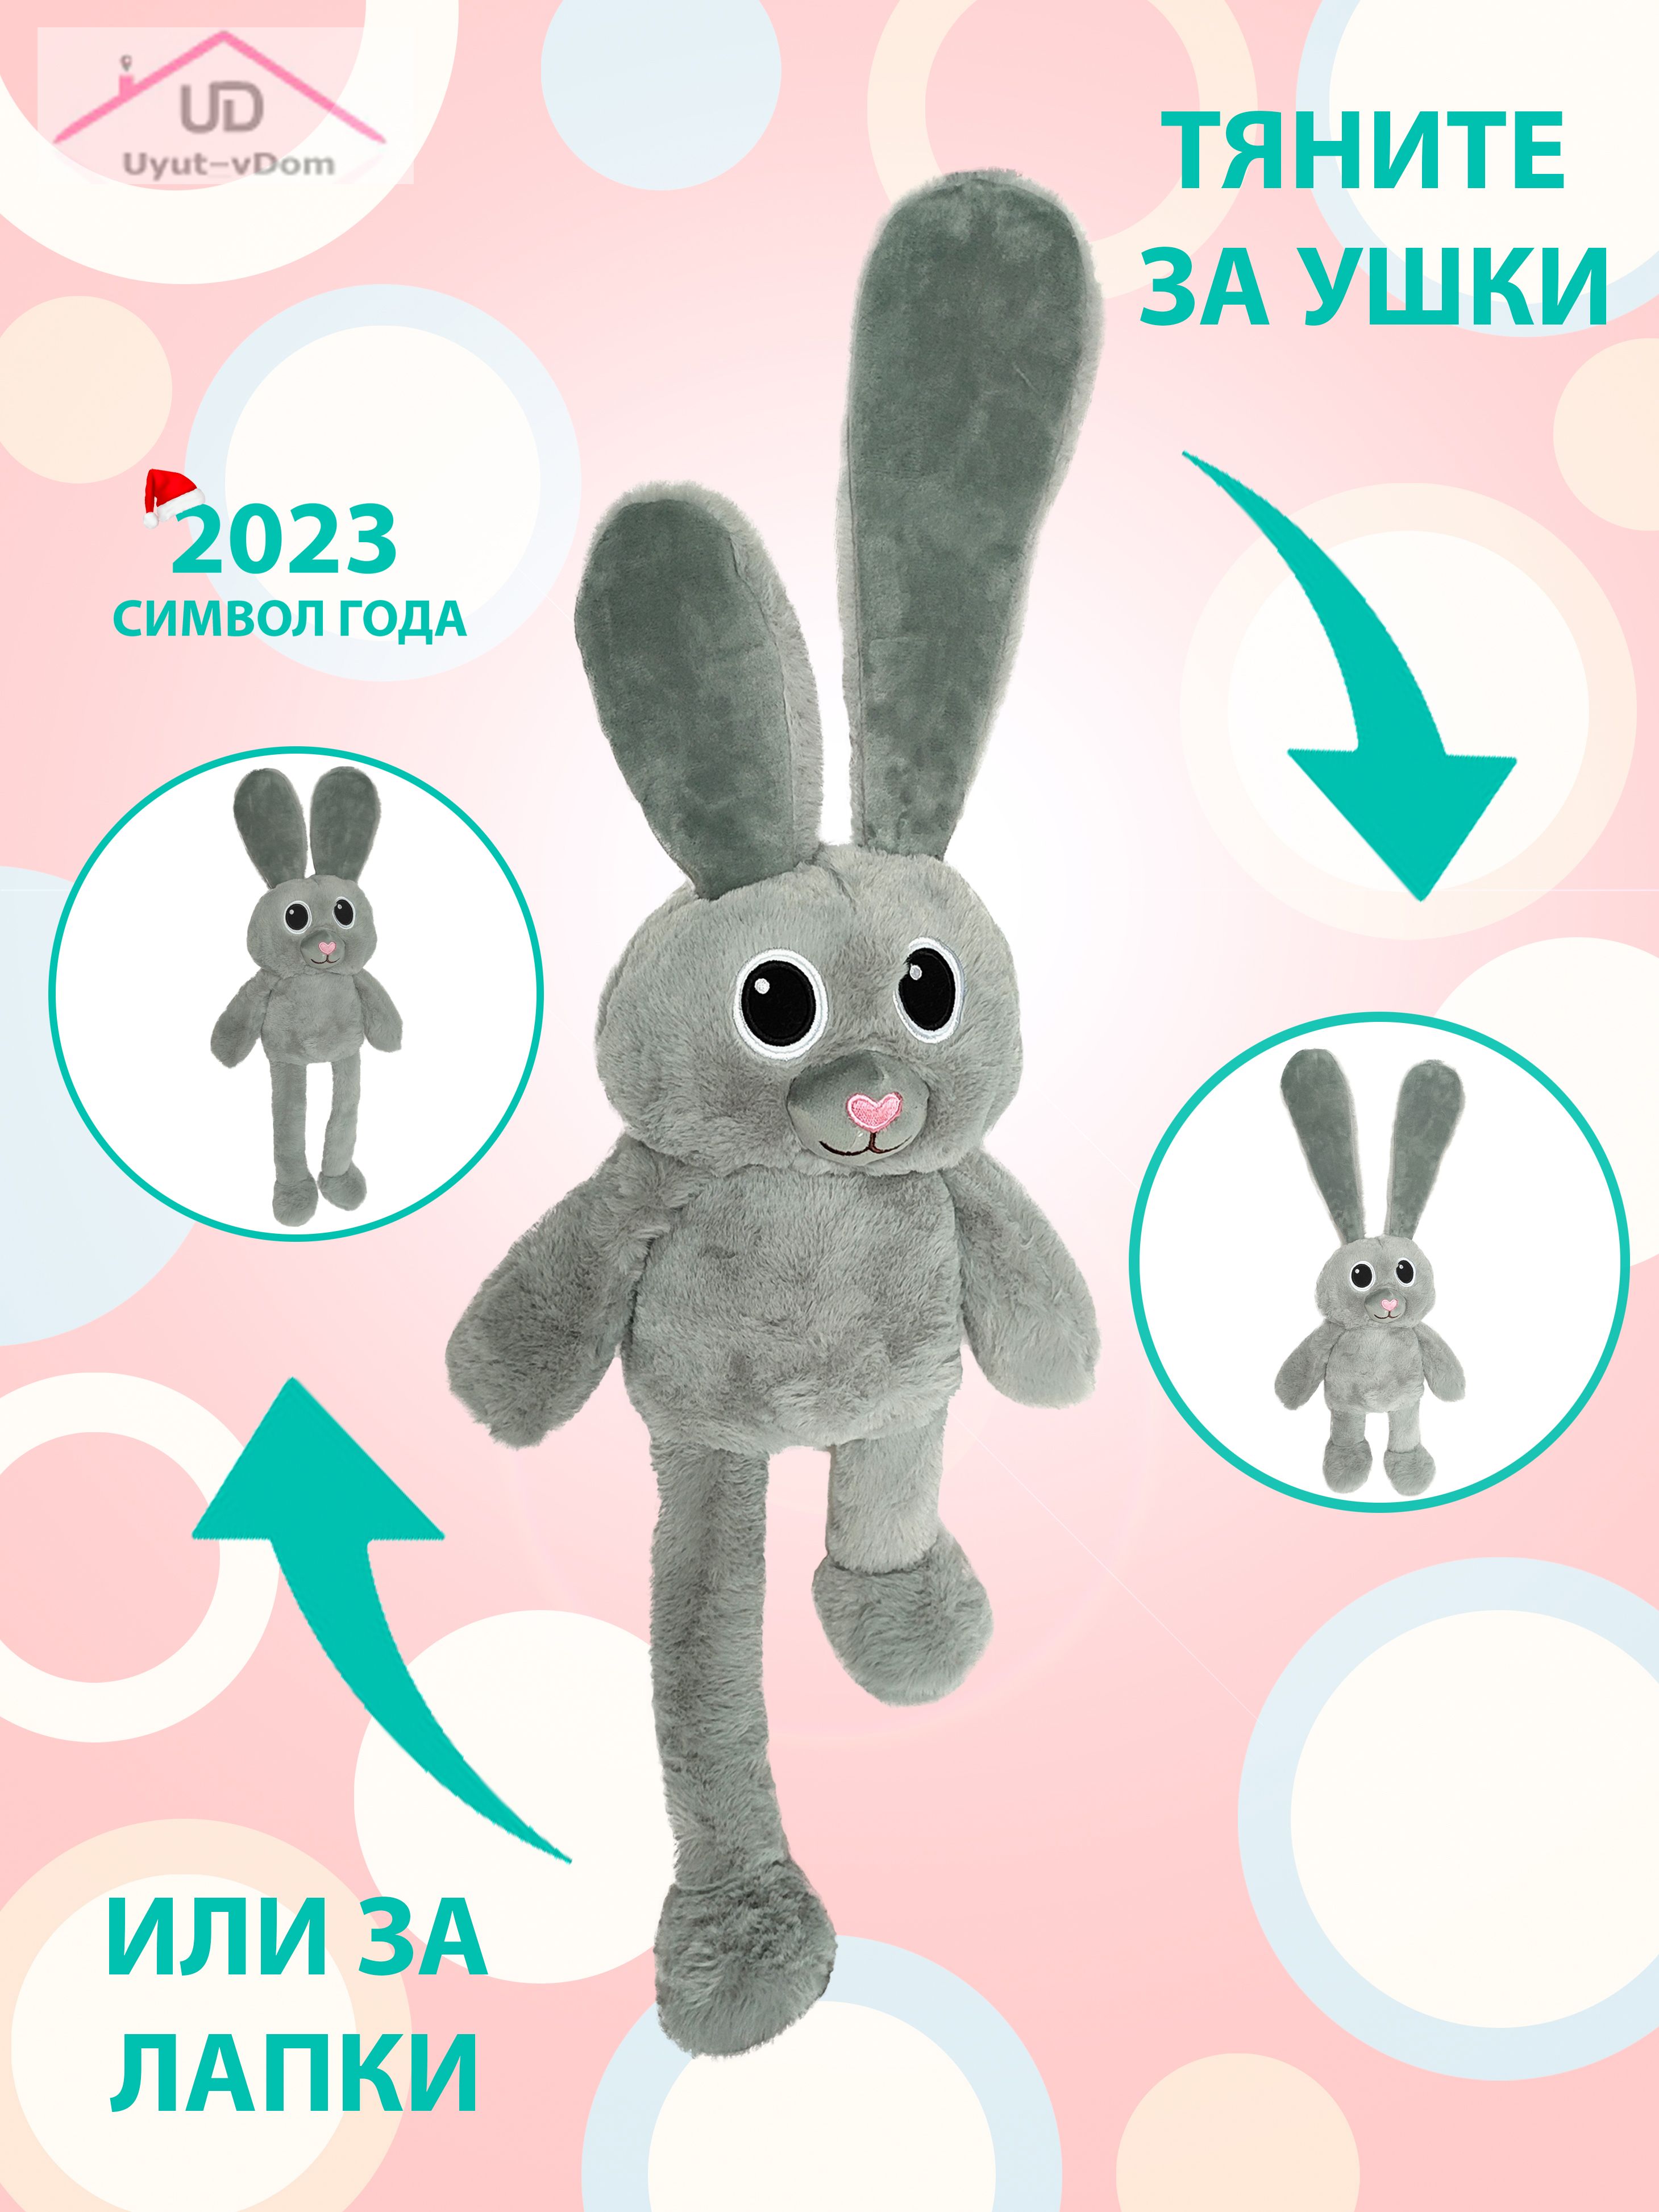 Песни 2023 зайцев. Заяц символ года 2023. Кролик символ 2023. Макс заяц 2023. Творческая работа "кролик - символ 2023 года".